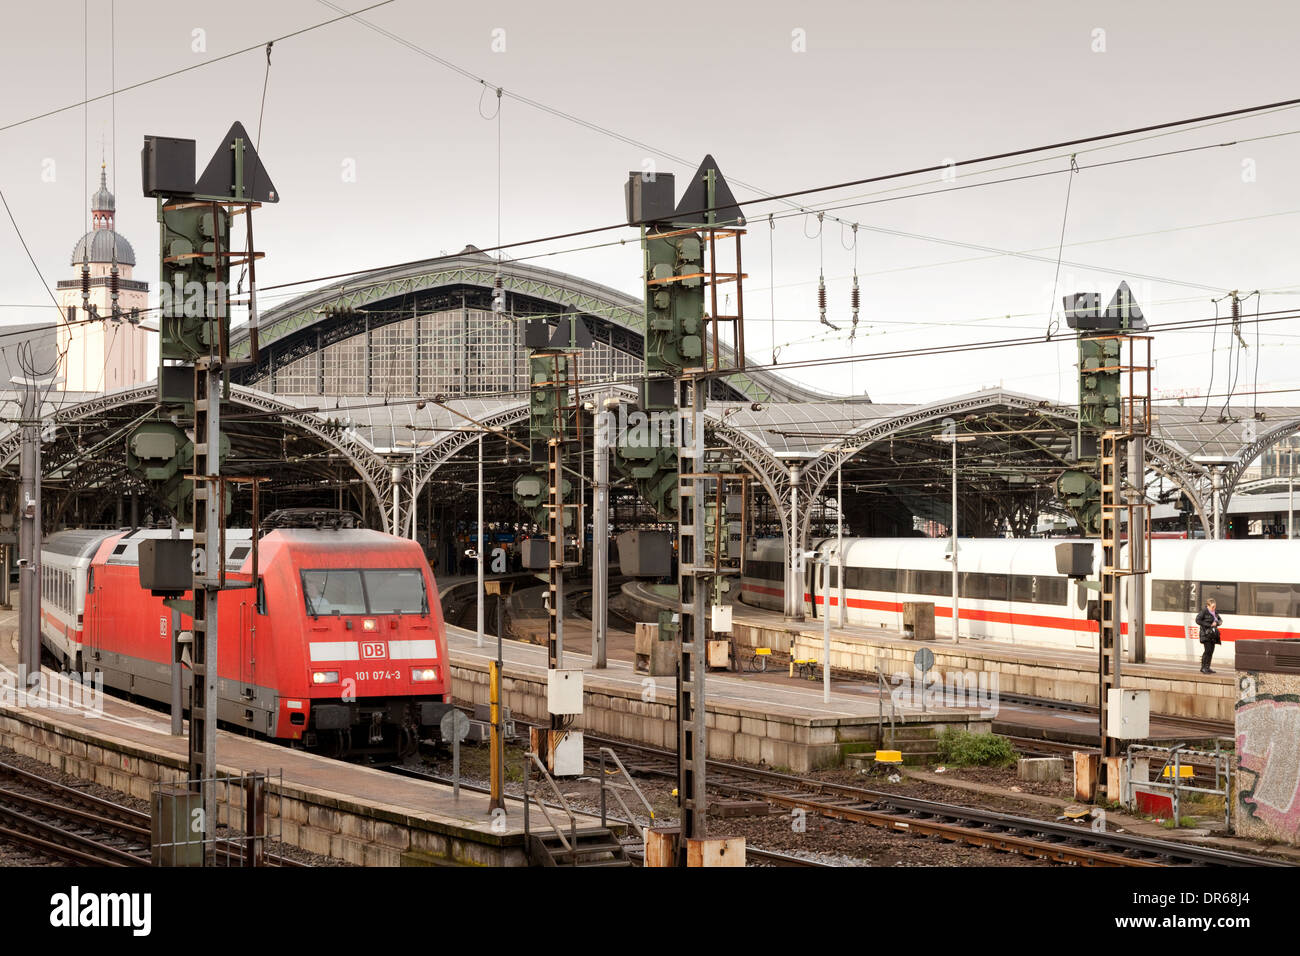 Bahnhof Köln und Züge, Köln (Köln), Deutschland, Europa Stockfoto